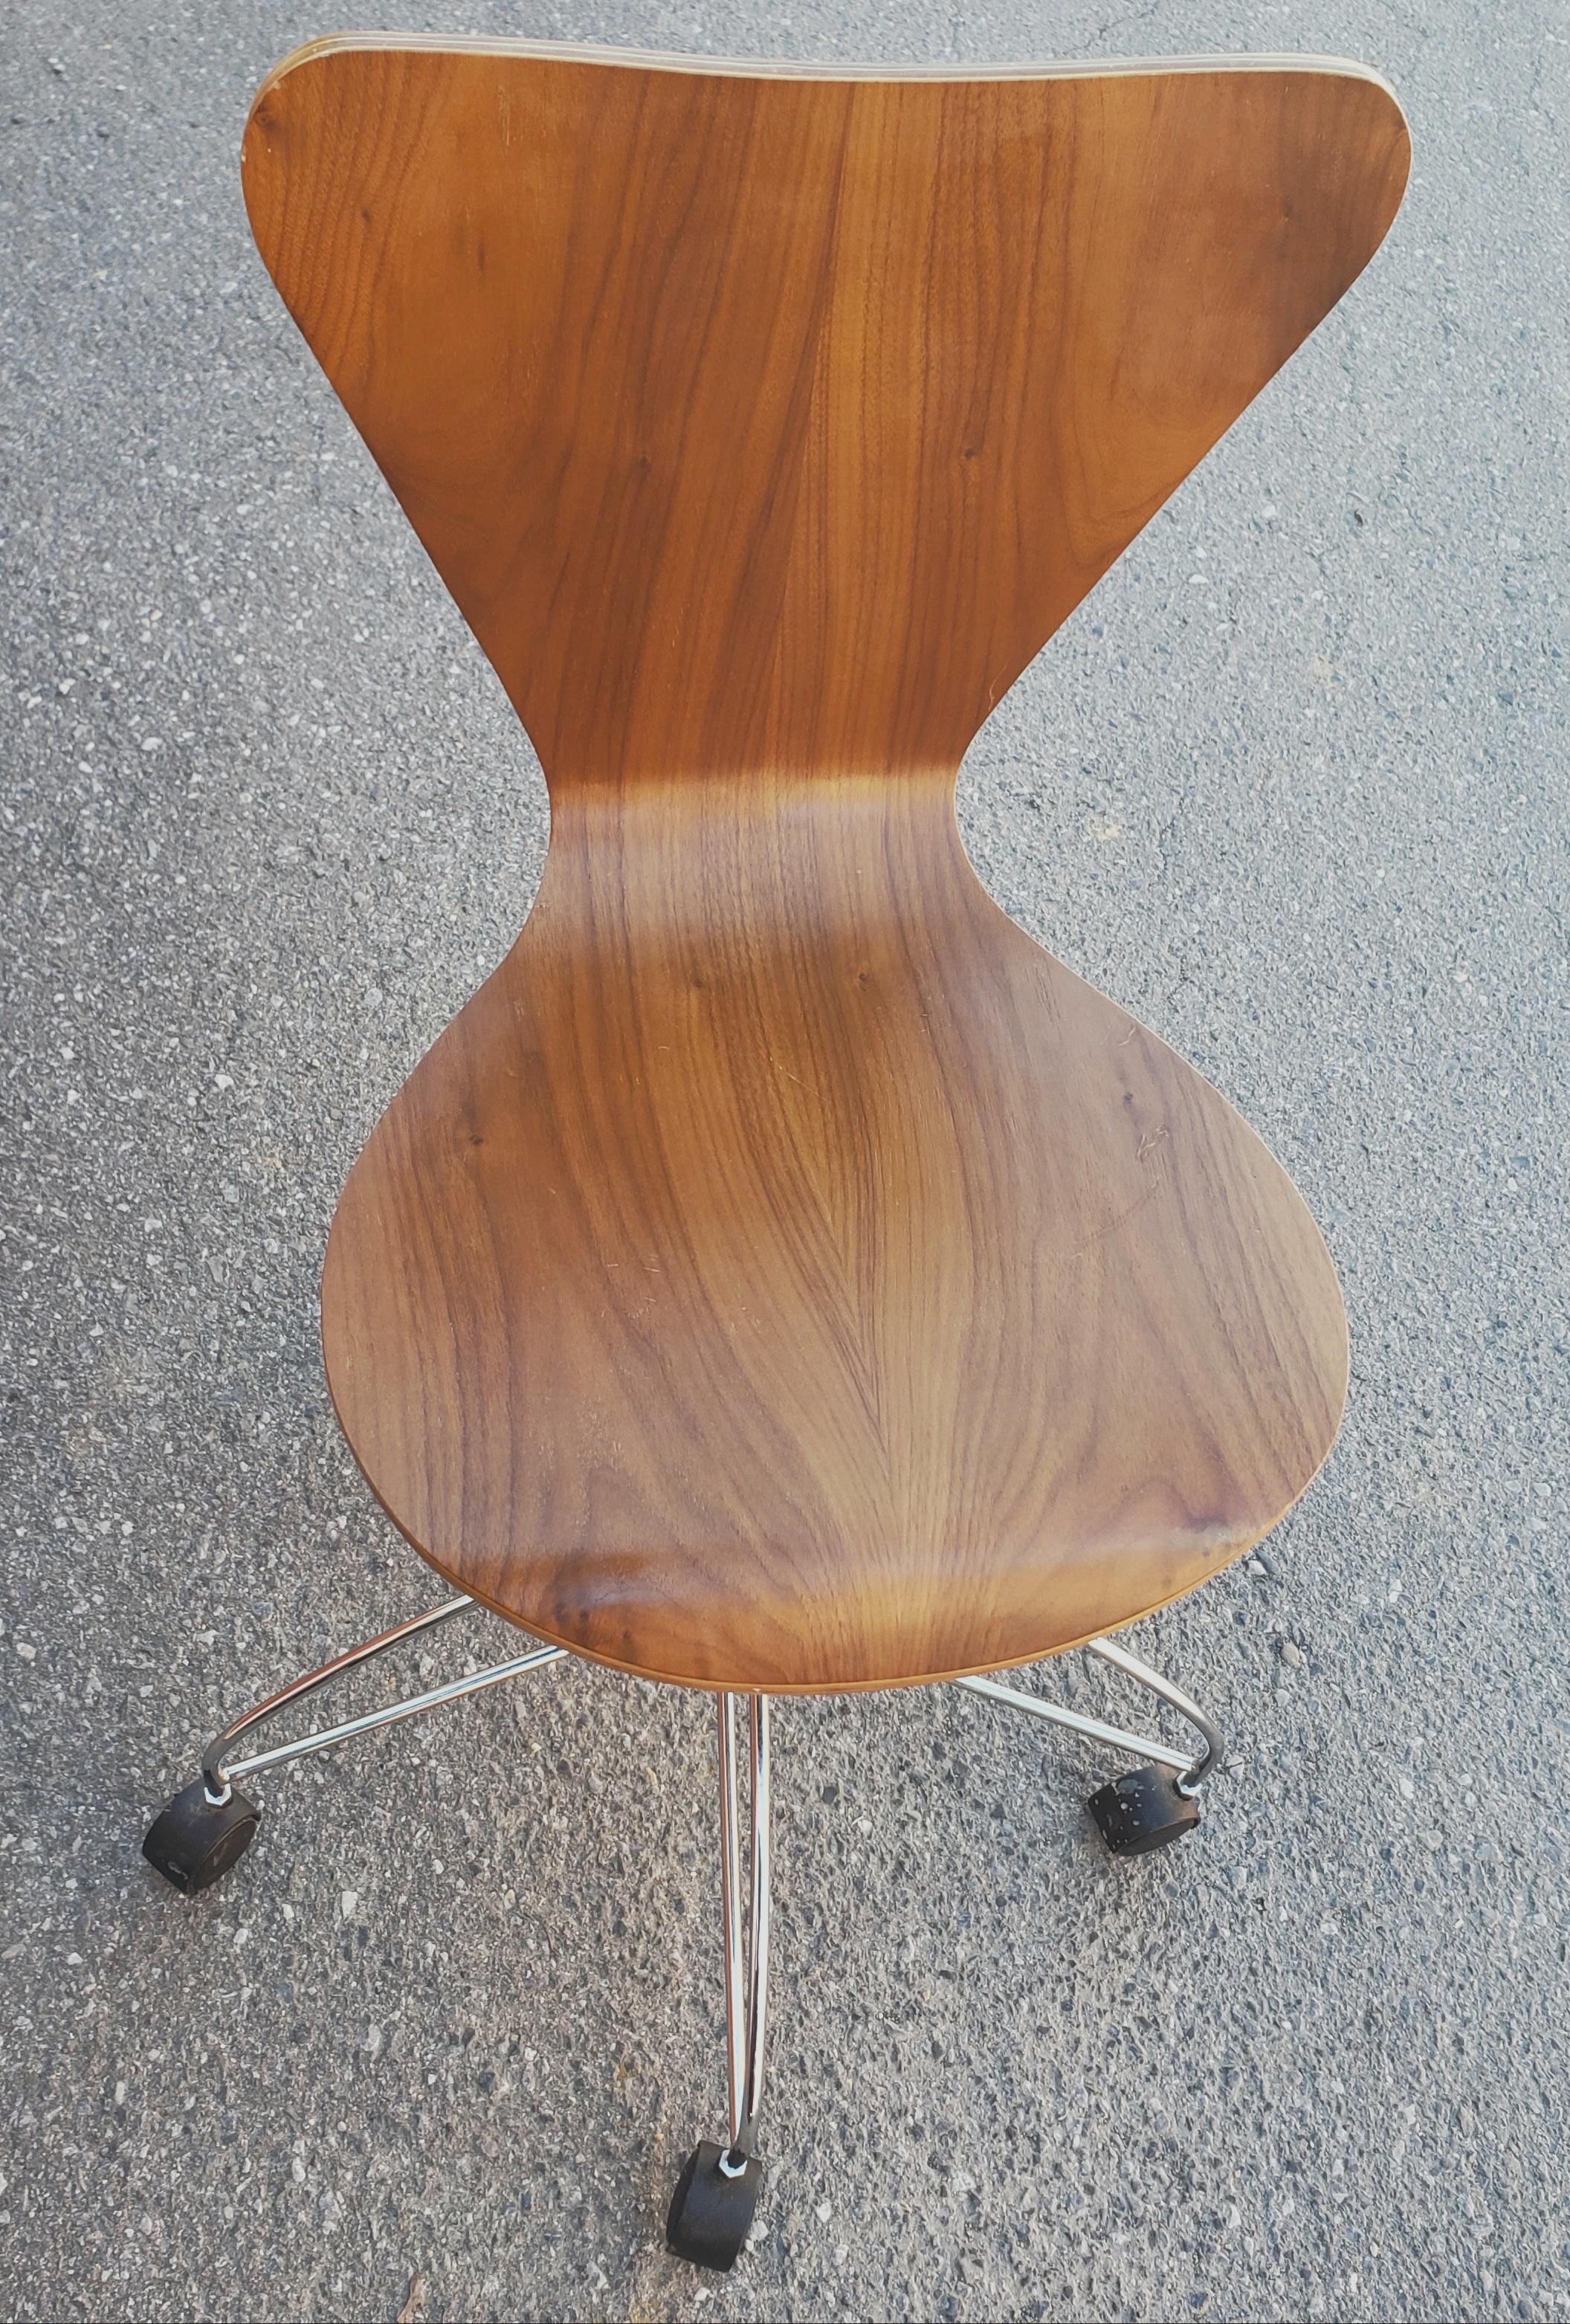 Metalwork Arne Jacobsen Danish Teak Adjustable Height Swivel Desk Chair For Sale